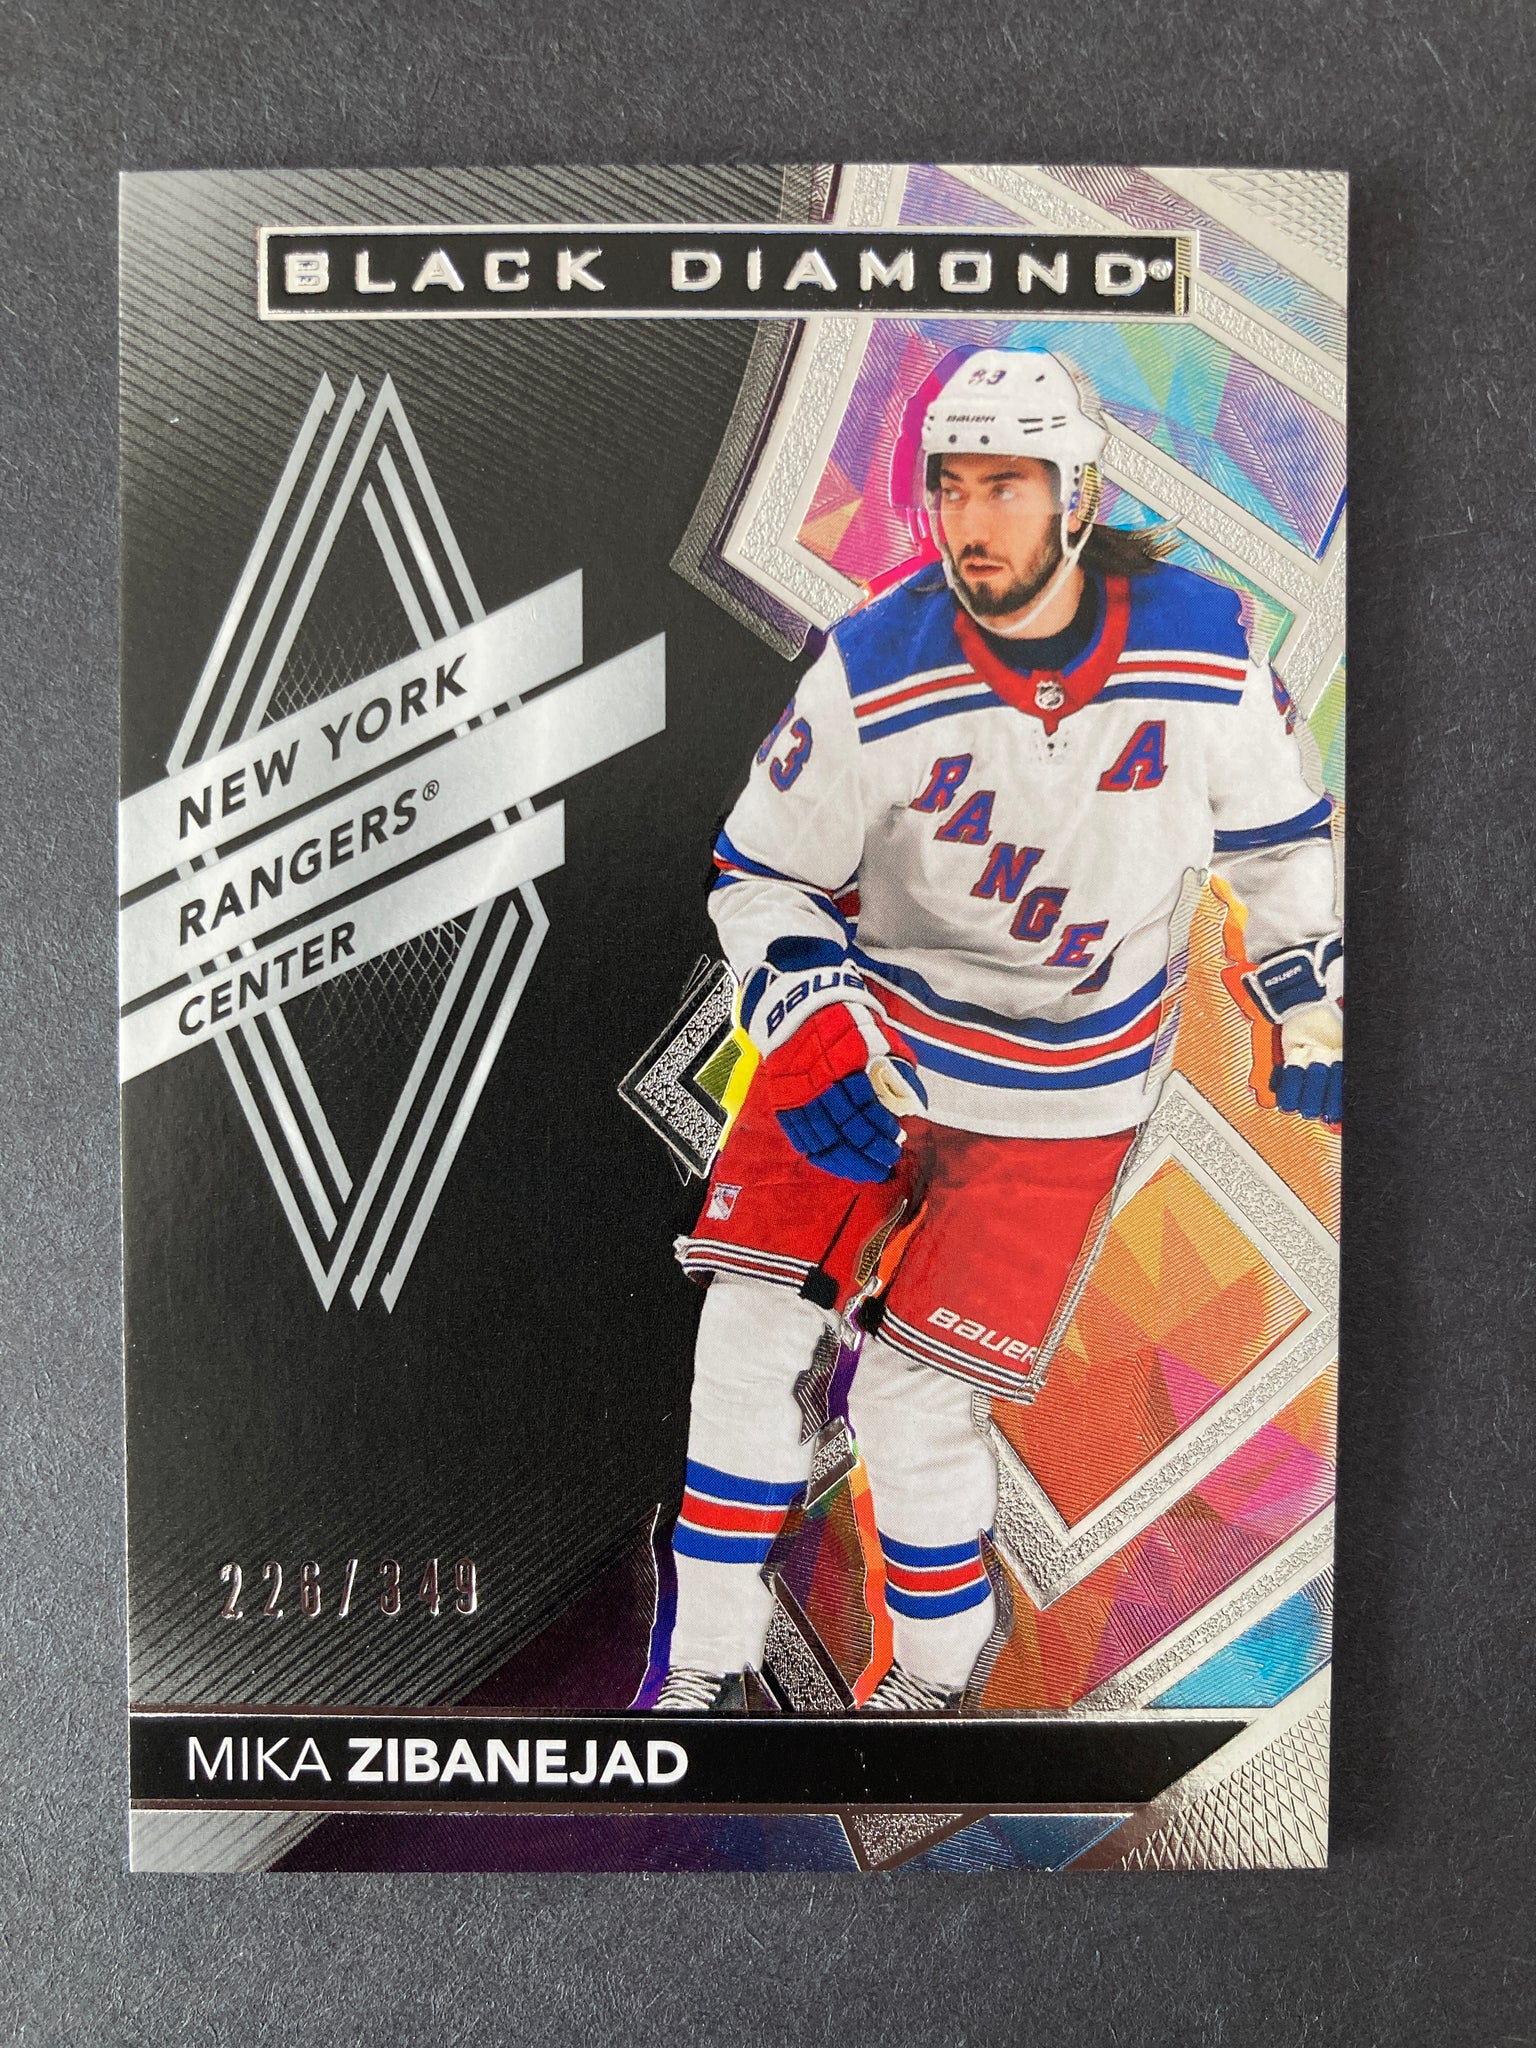 Mika Zibanejad 2020 Black Diamond #d /349 New York Rangers